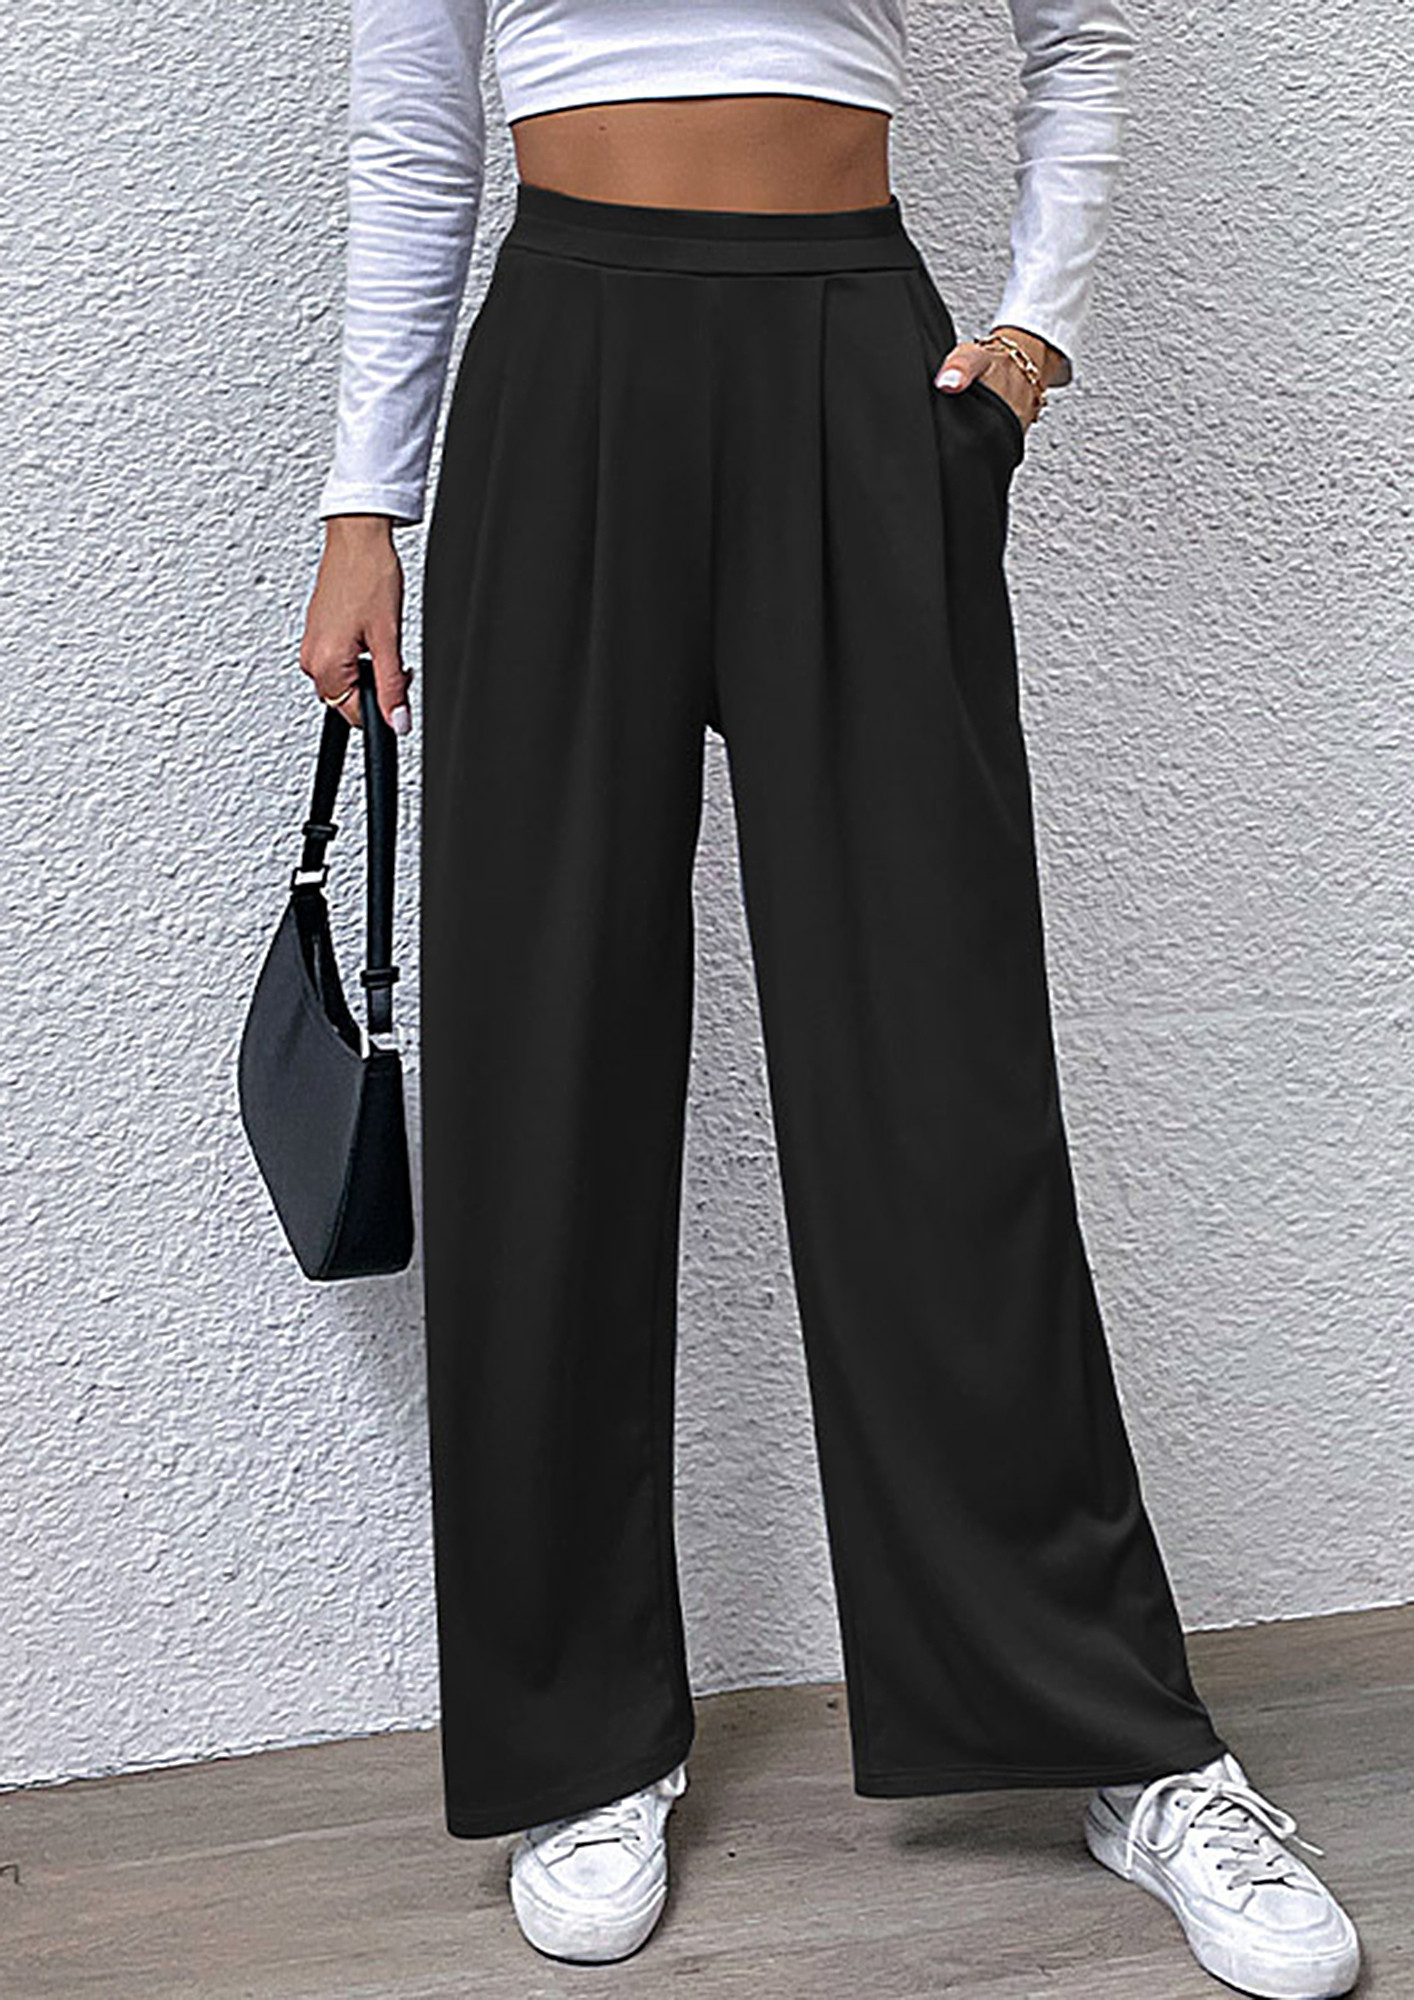 Buy Tagas Women's Regular Pants (TR-9000-BLACK- Black_XS) at Amazon.in